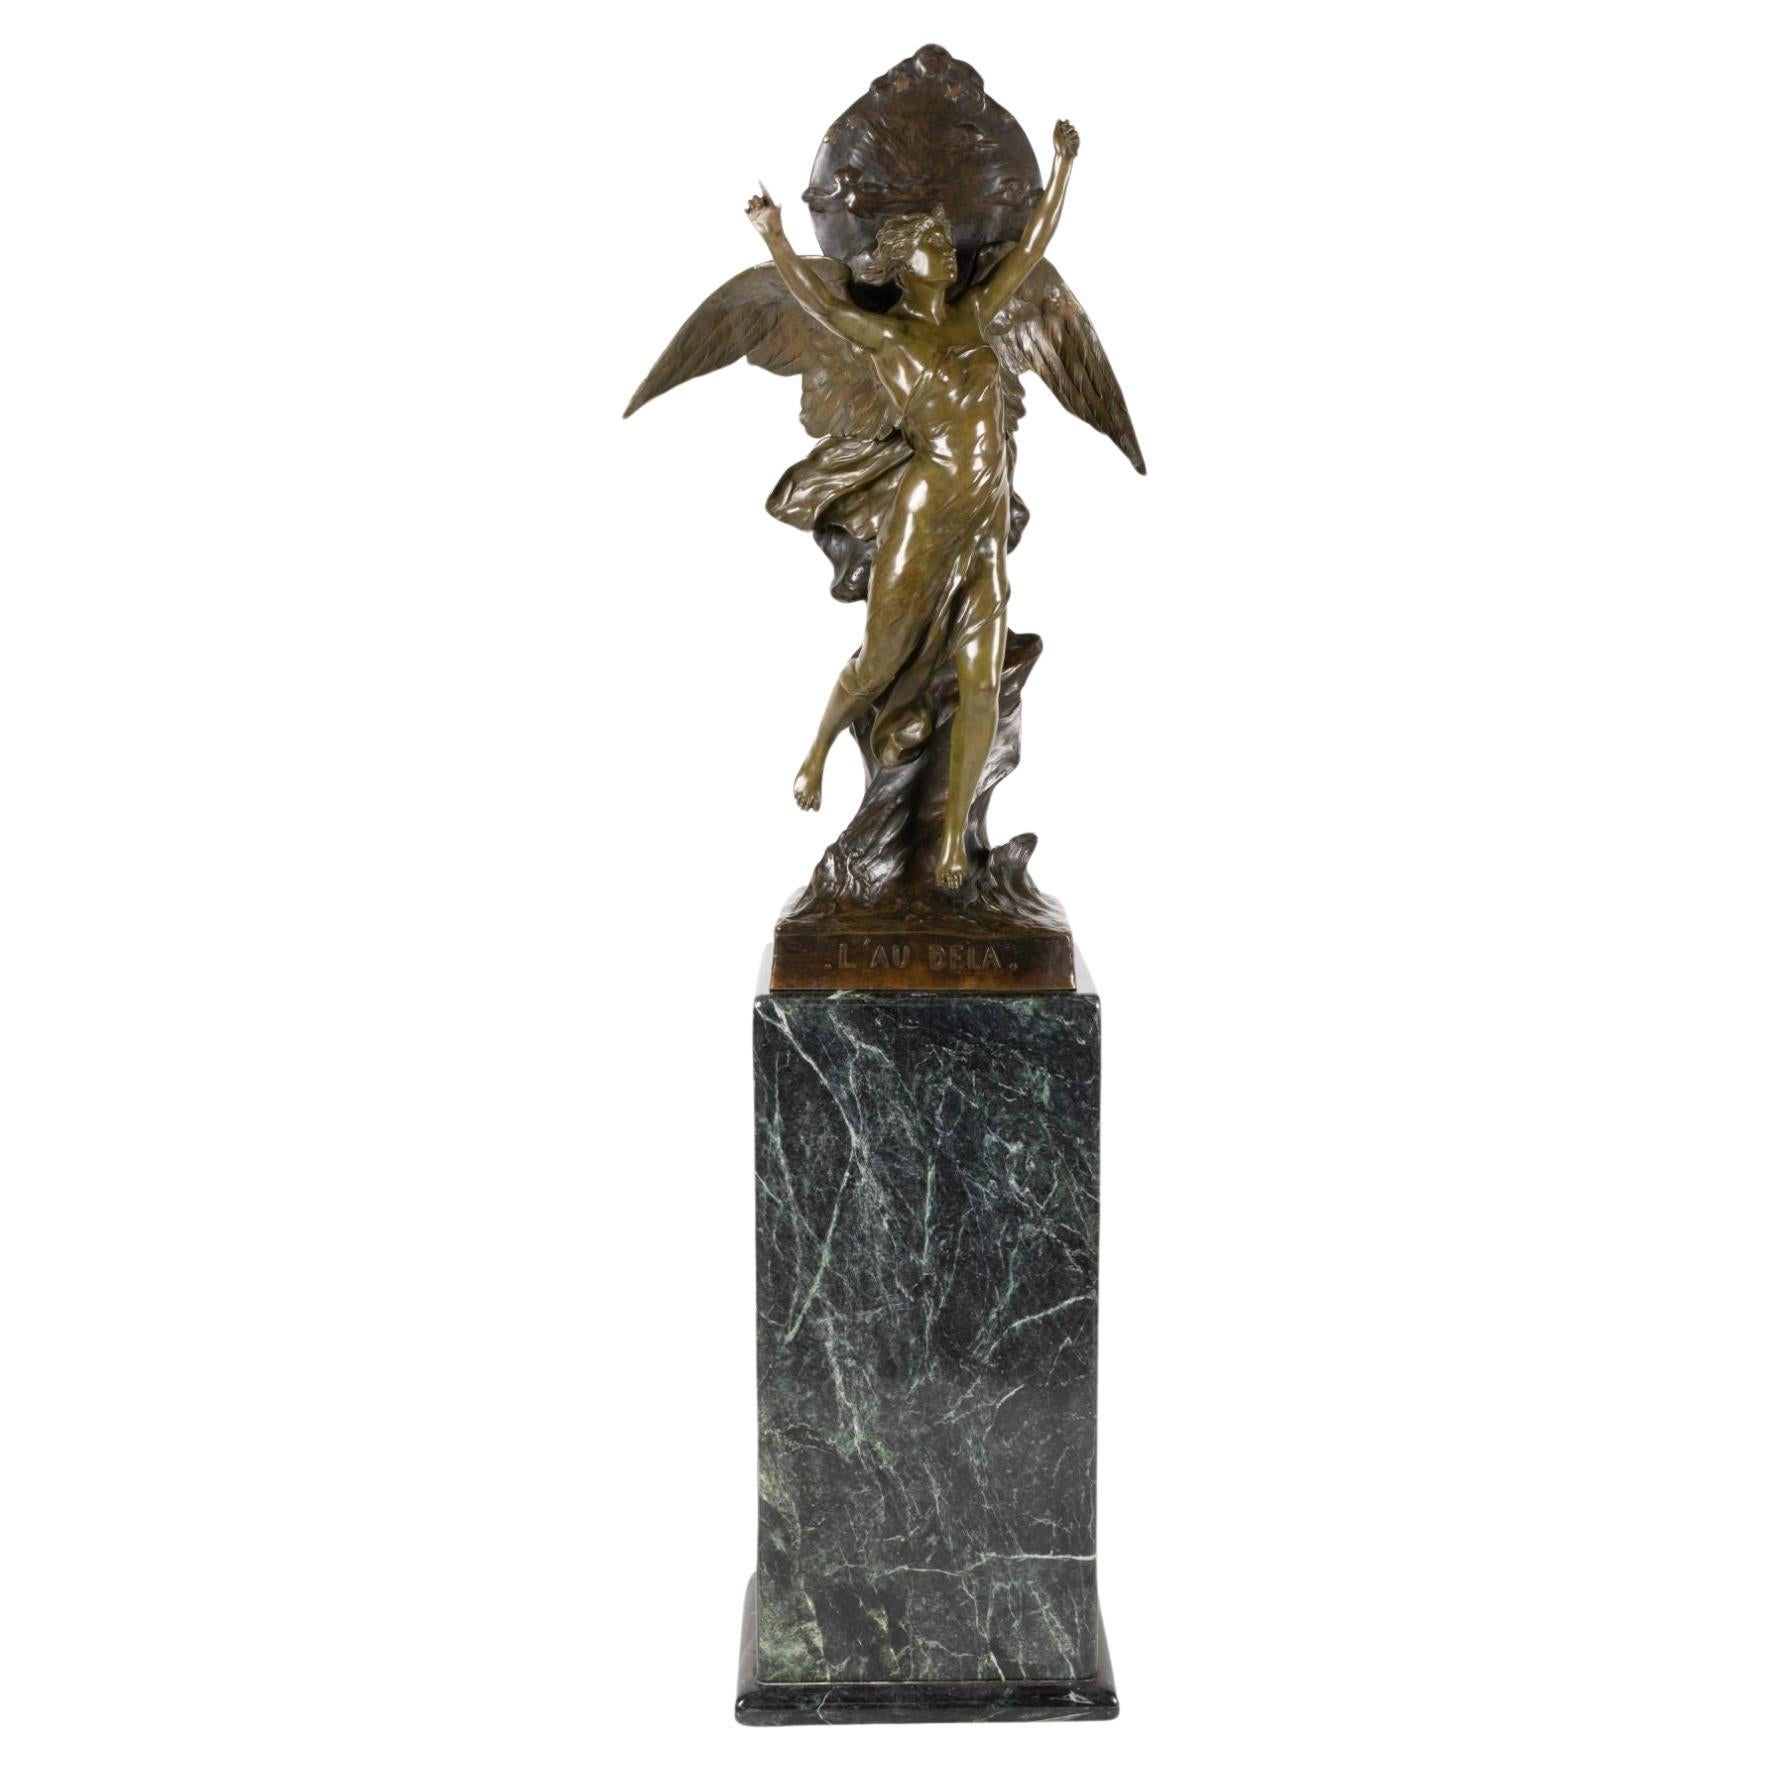 L'au Dela" Bronzeskulptur auf Marmorsockel von Émile Louis Picault